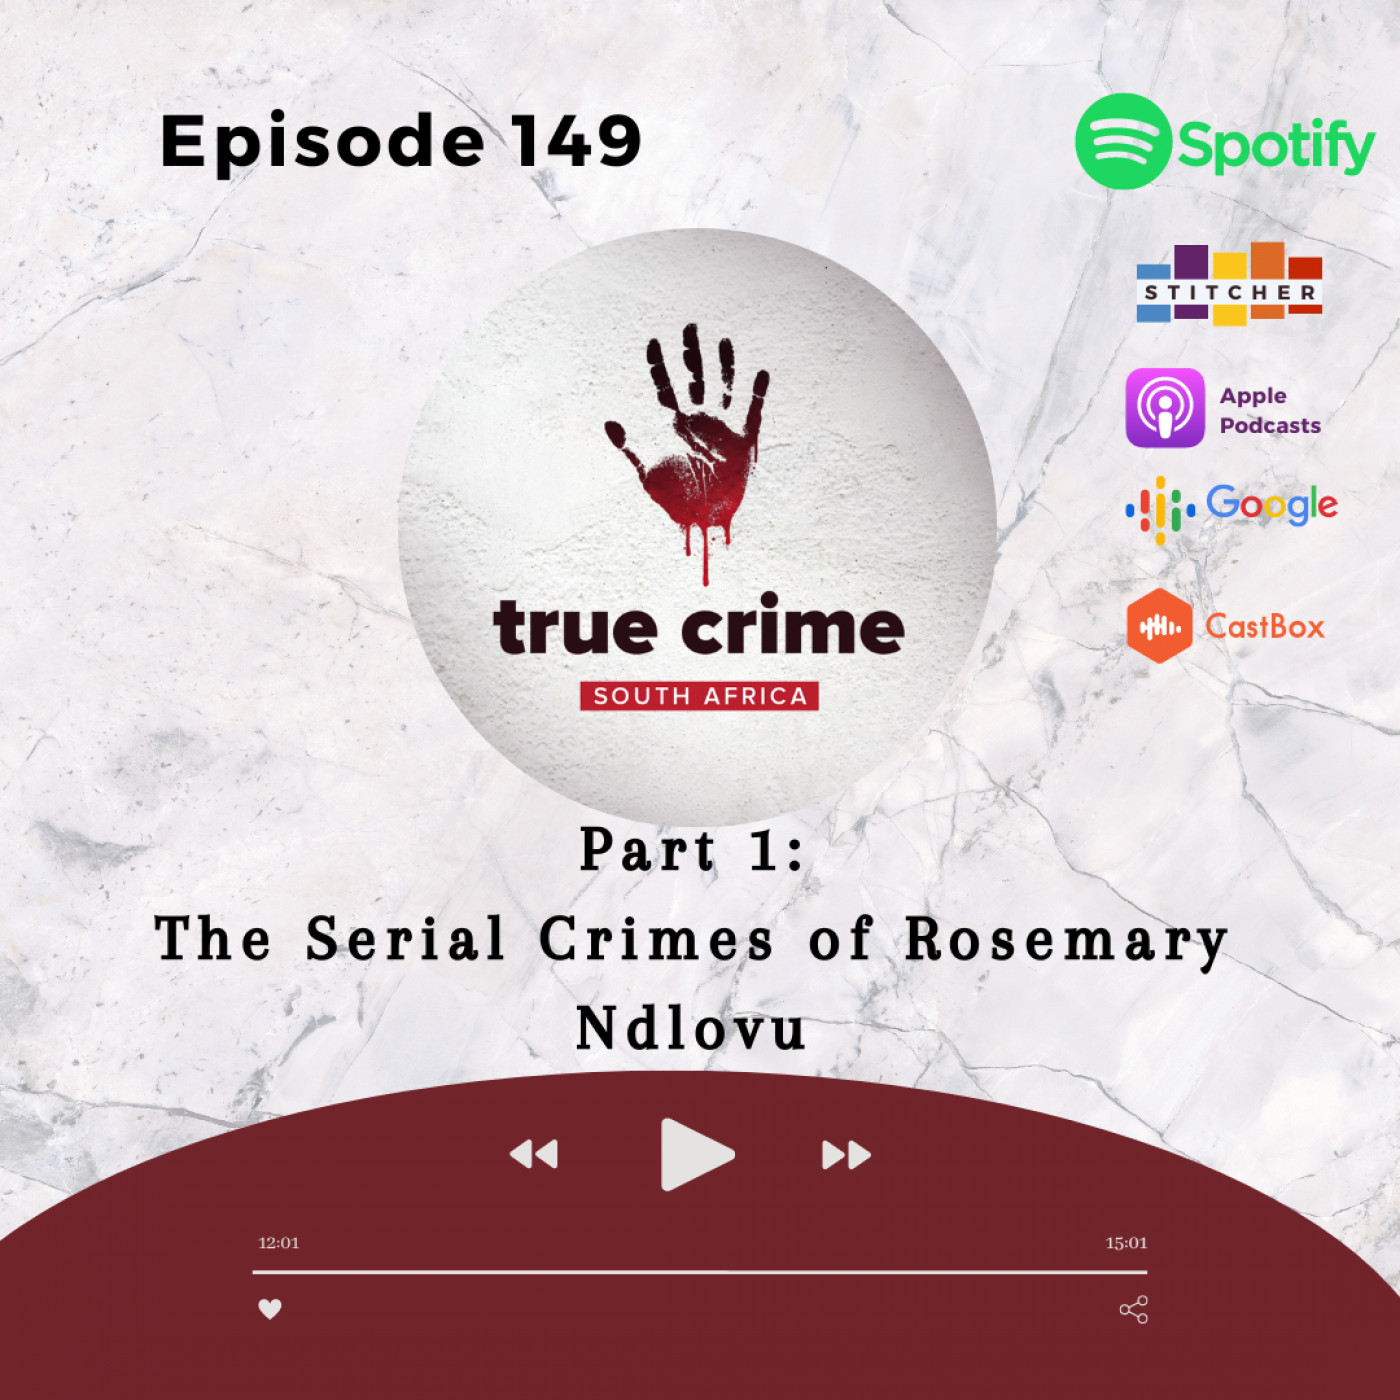 Episode 149 The Serial Crimes of Rosemary Ndlovu Part 1